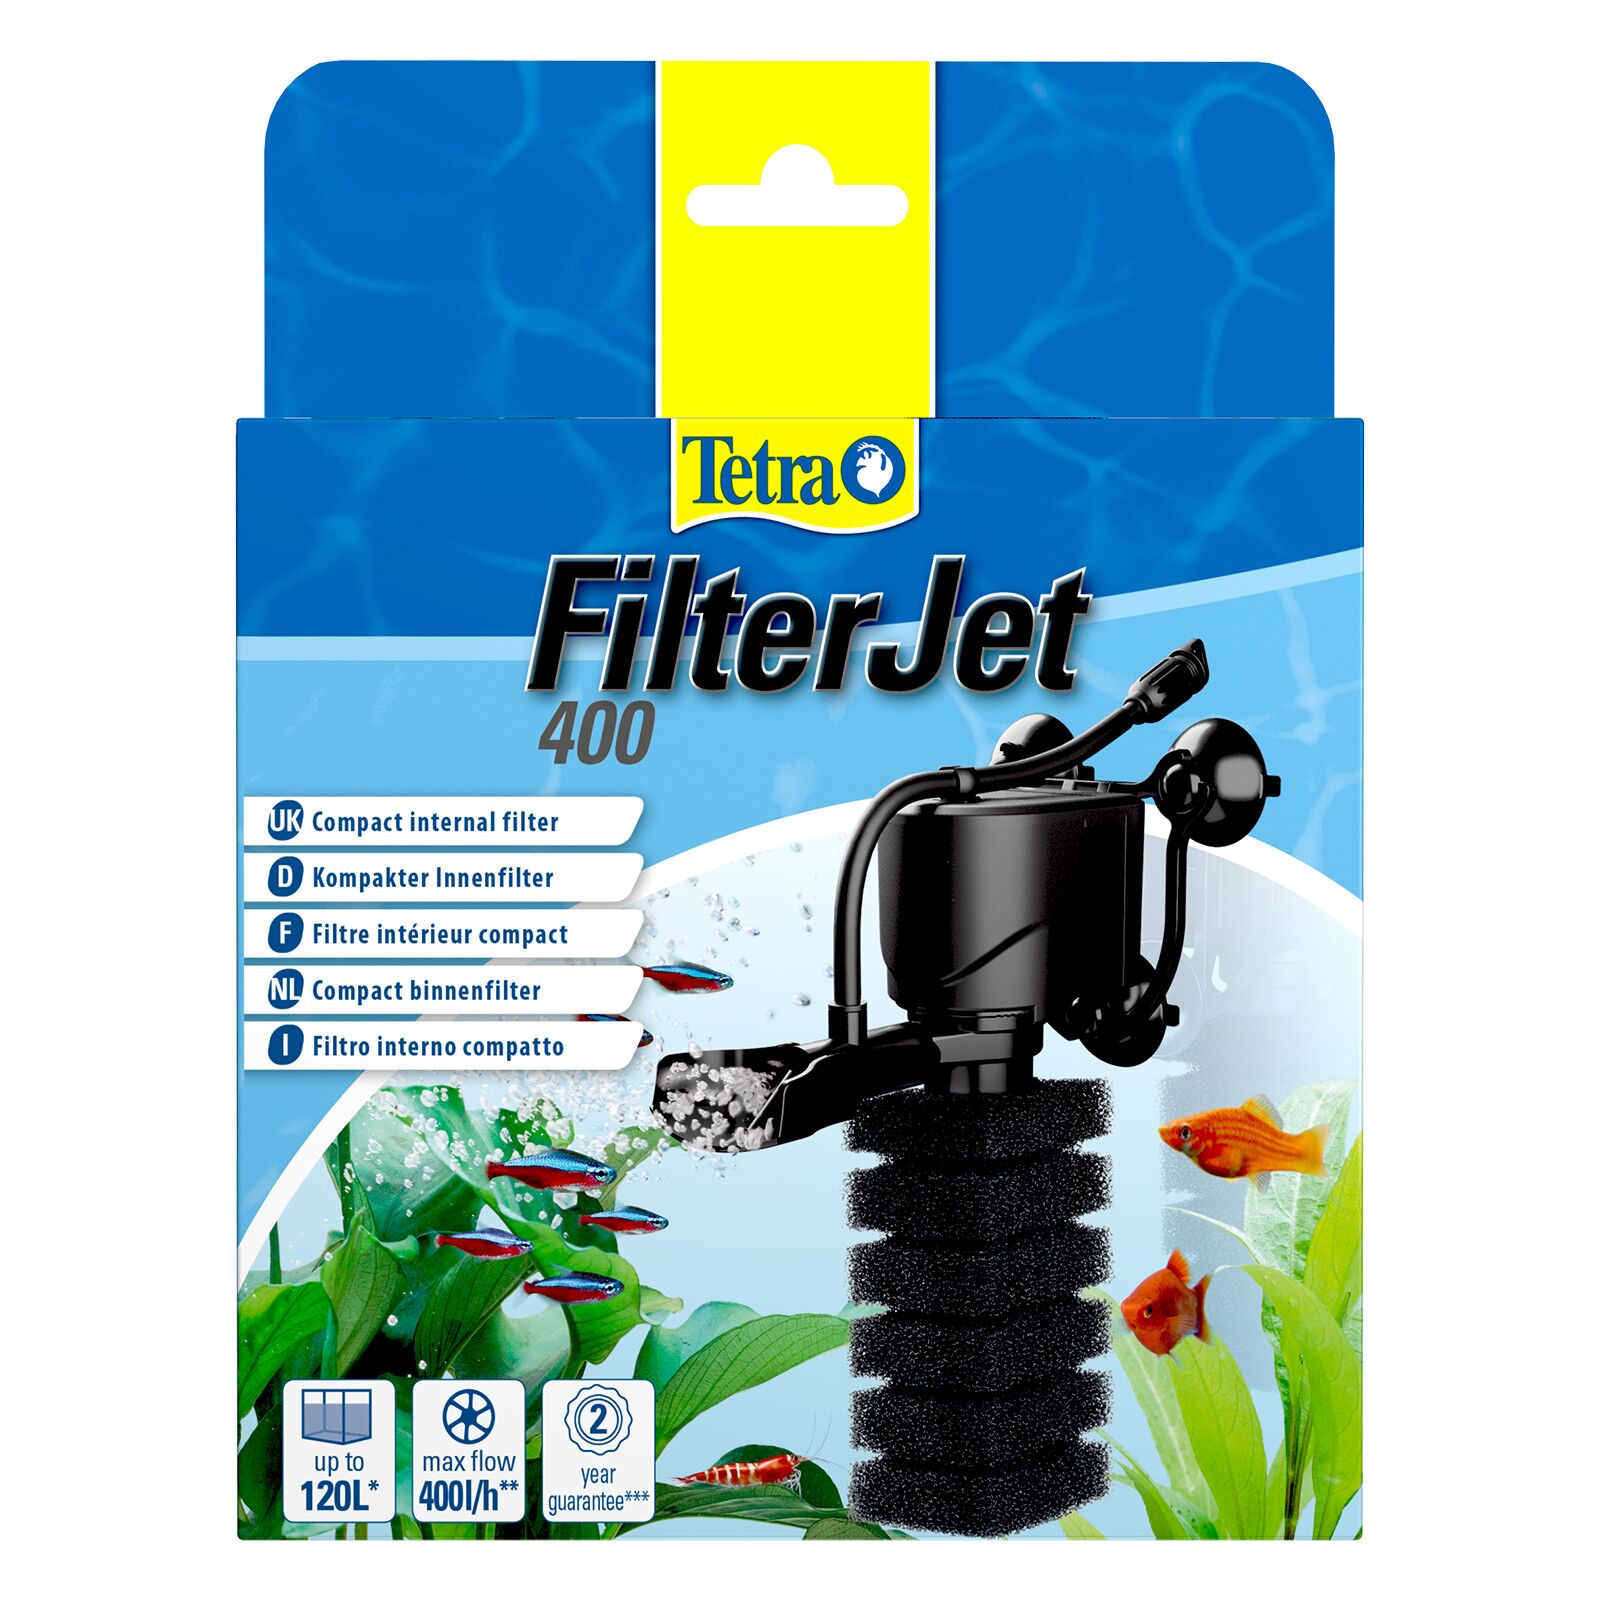 Beperking Haast je Vergelden Tetra - FilterJet - 600 | Aquasabi - Aquascaping Shop